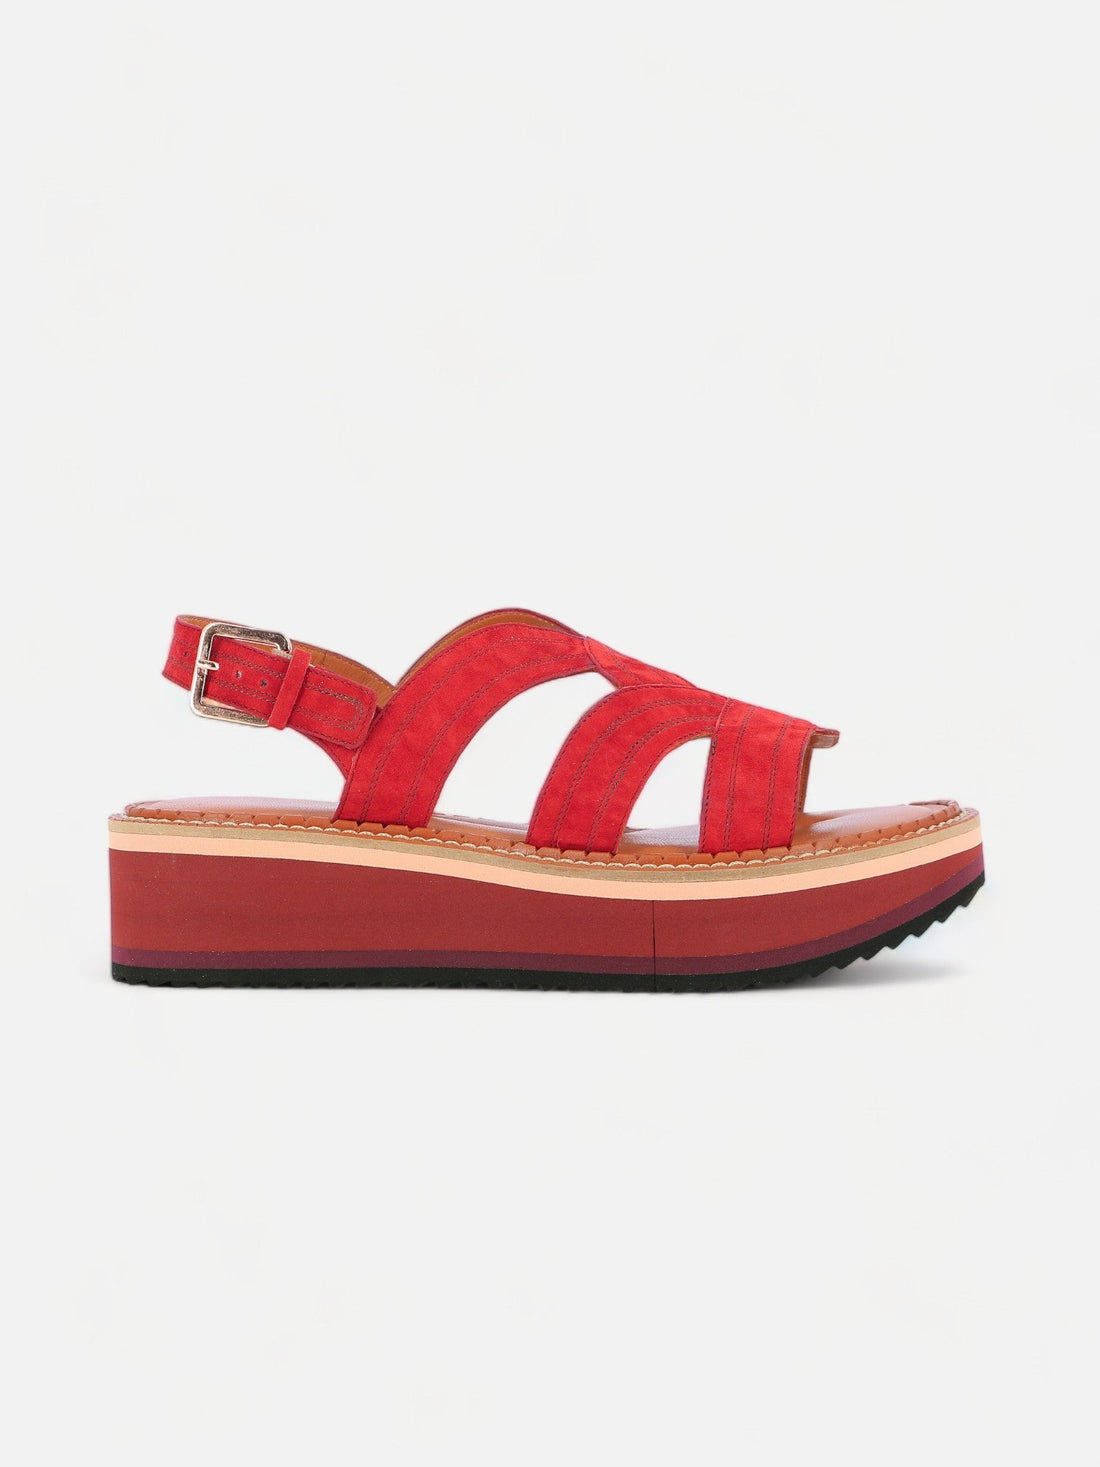 SANDALS - FRESIA sandals, suede red - 3606063964678 - Clergerie Paris - Europe